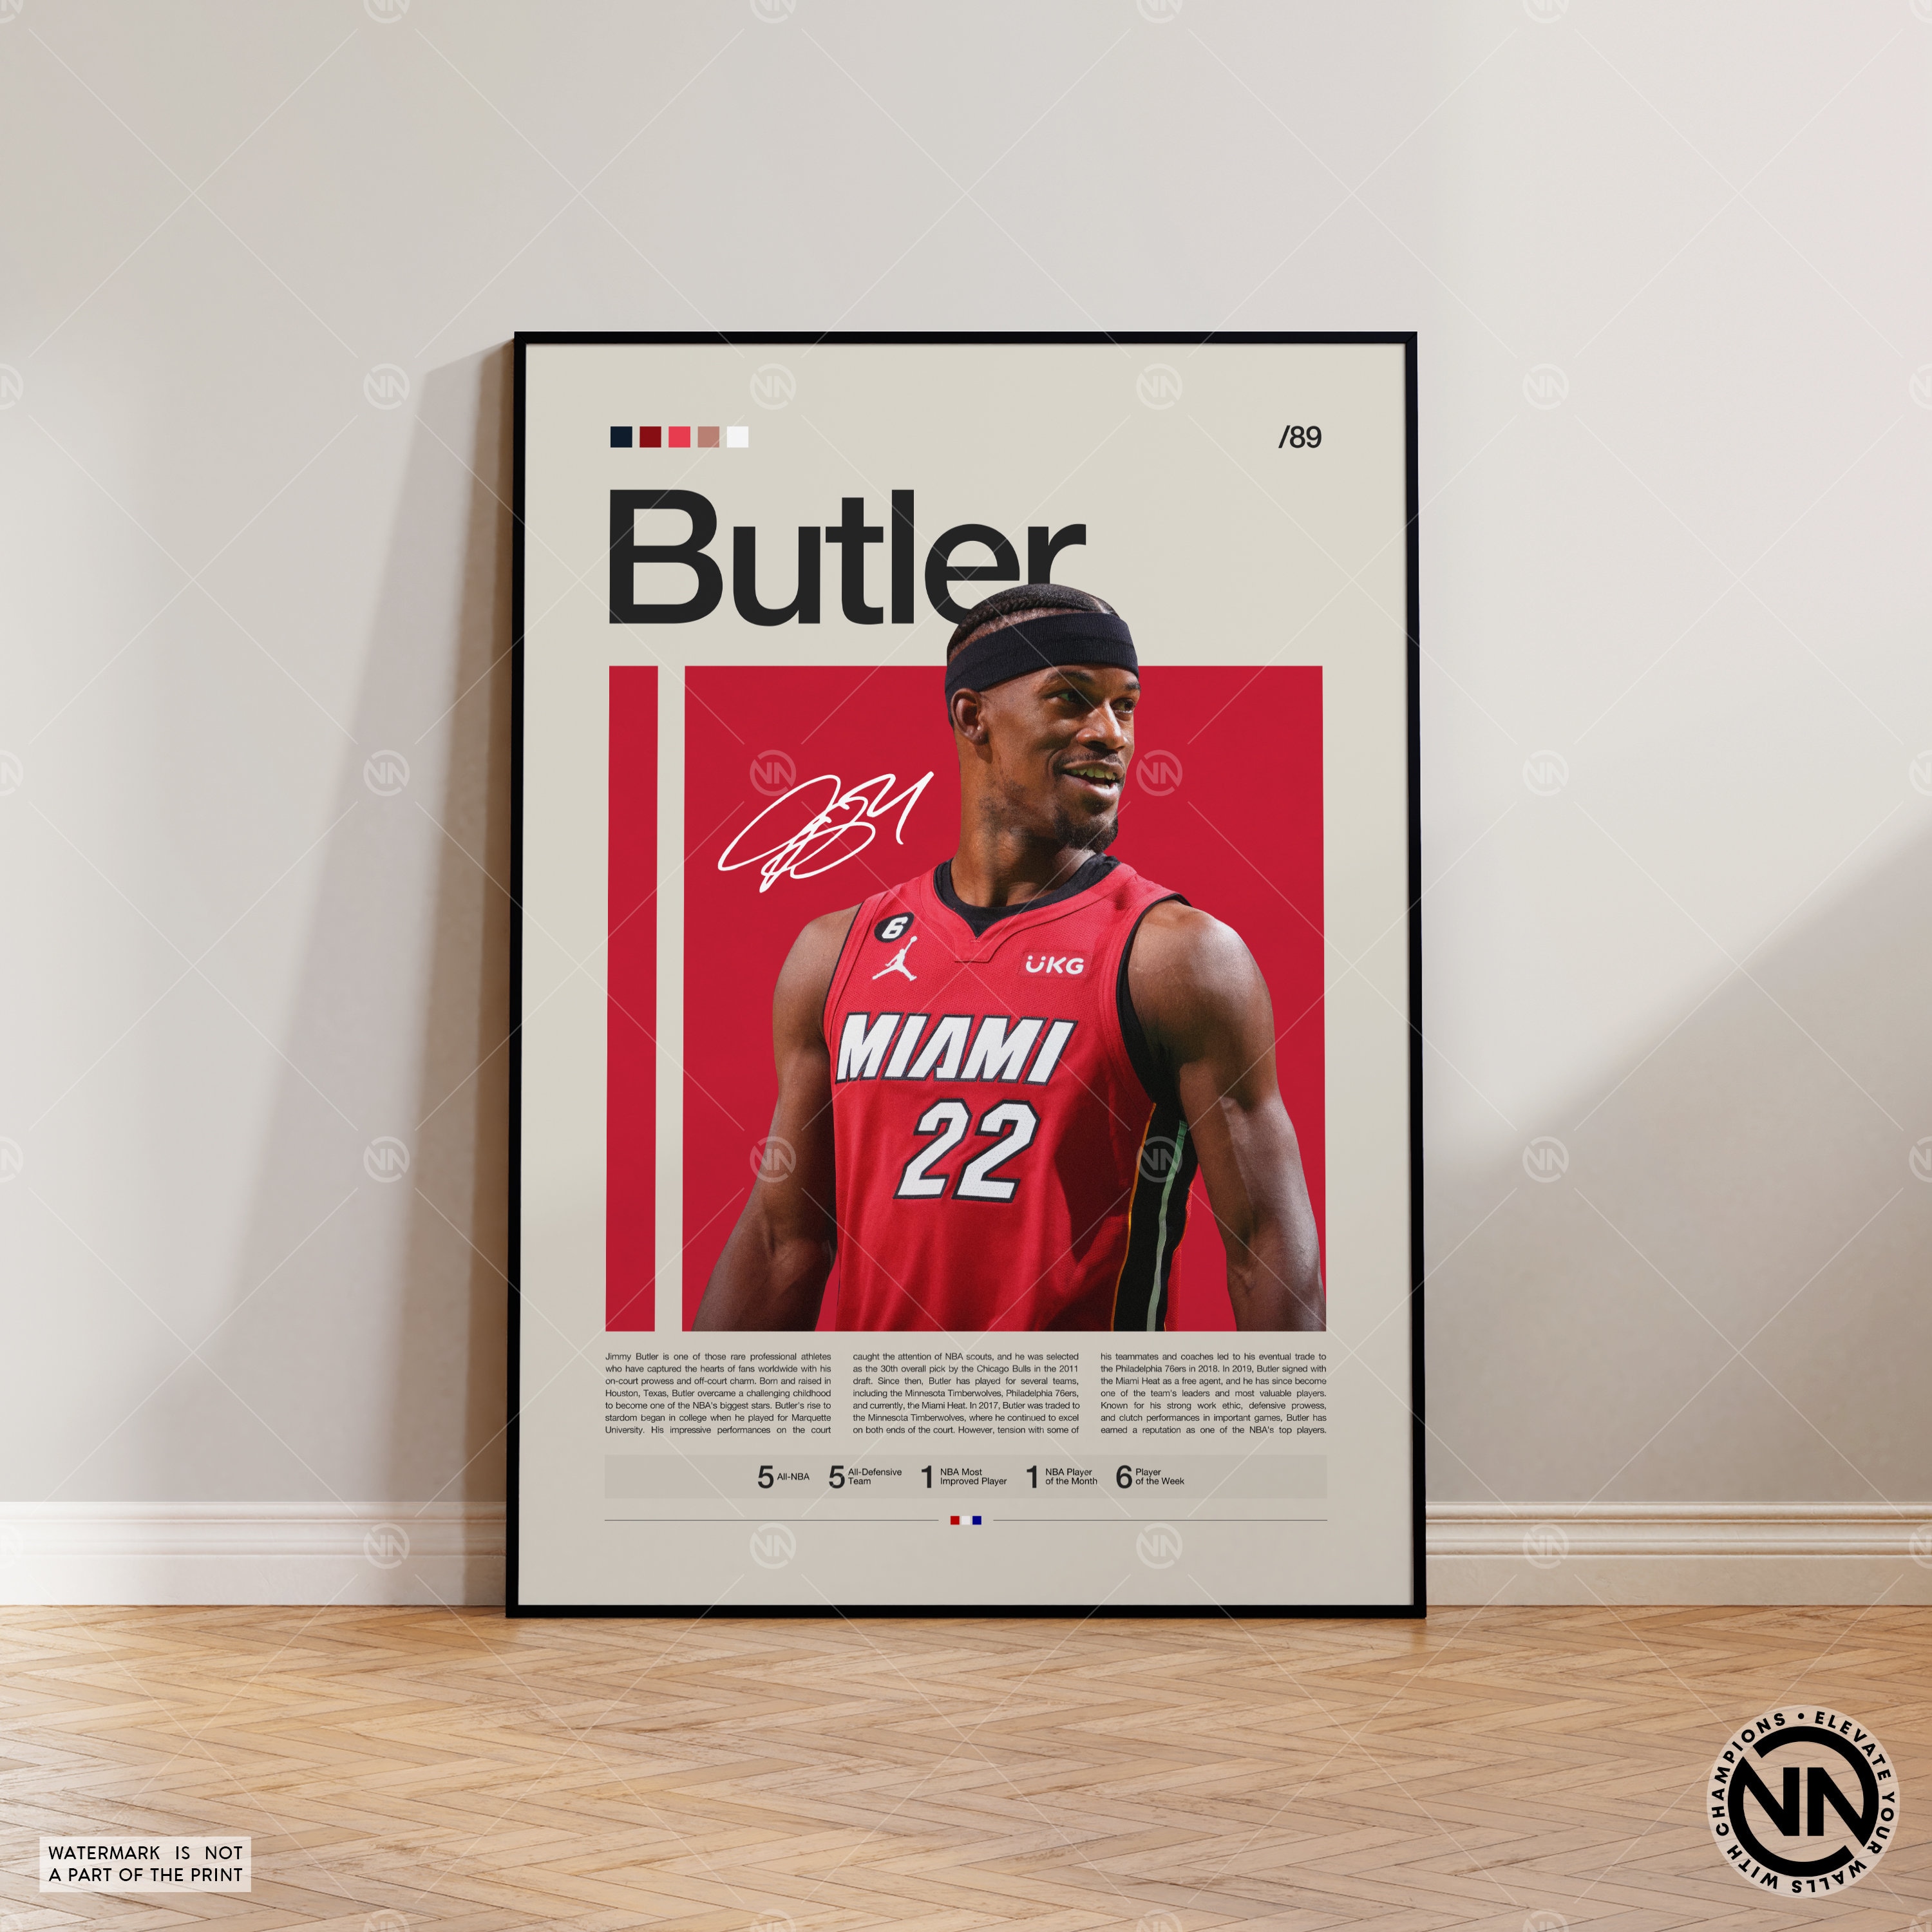 Jimmy Butler 22 23 Miami Basketball Star Wall Art Home Decor - POSTER 20x30